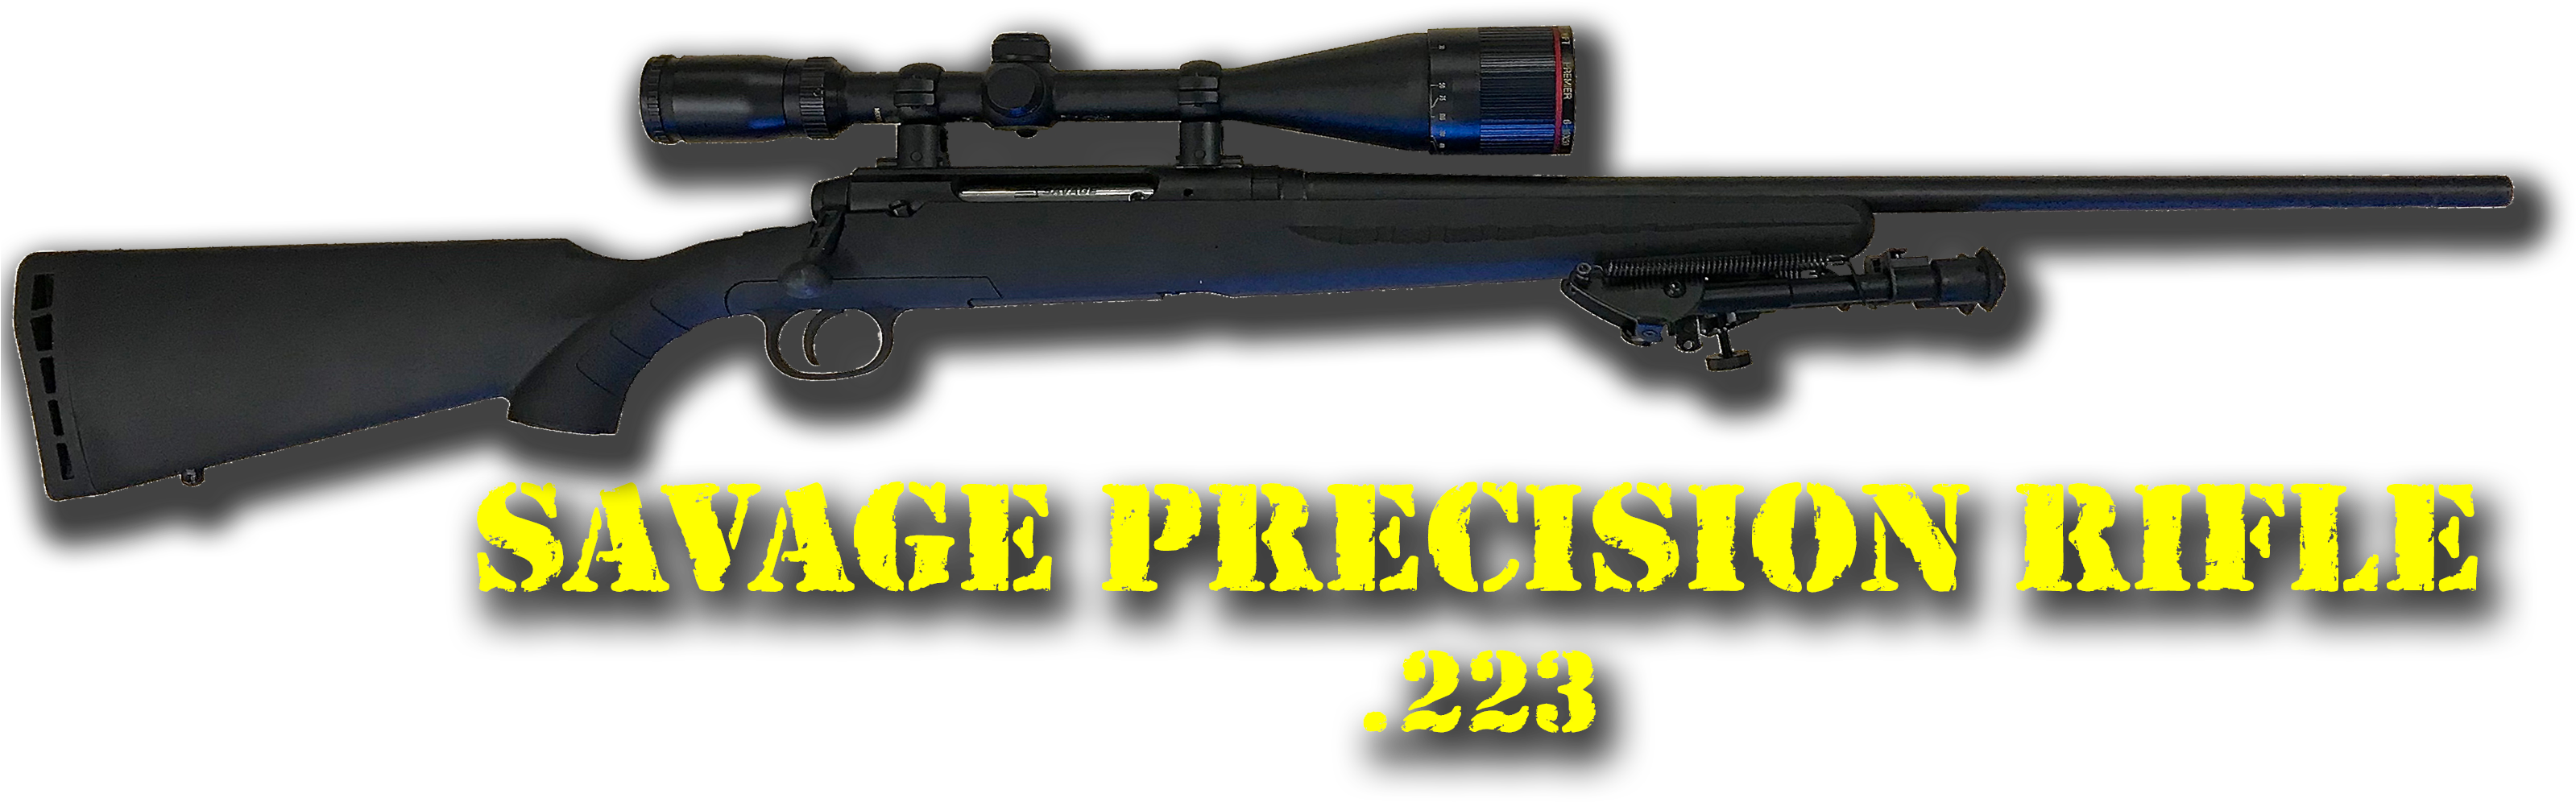 Savage Precision Rifle223